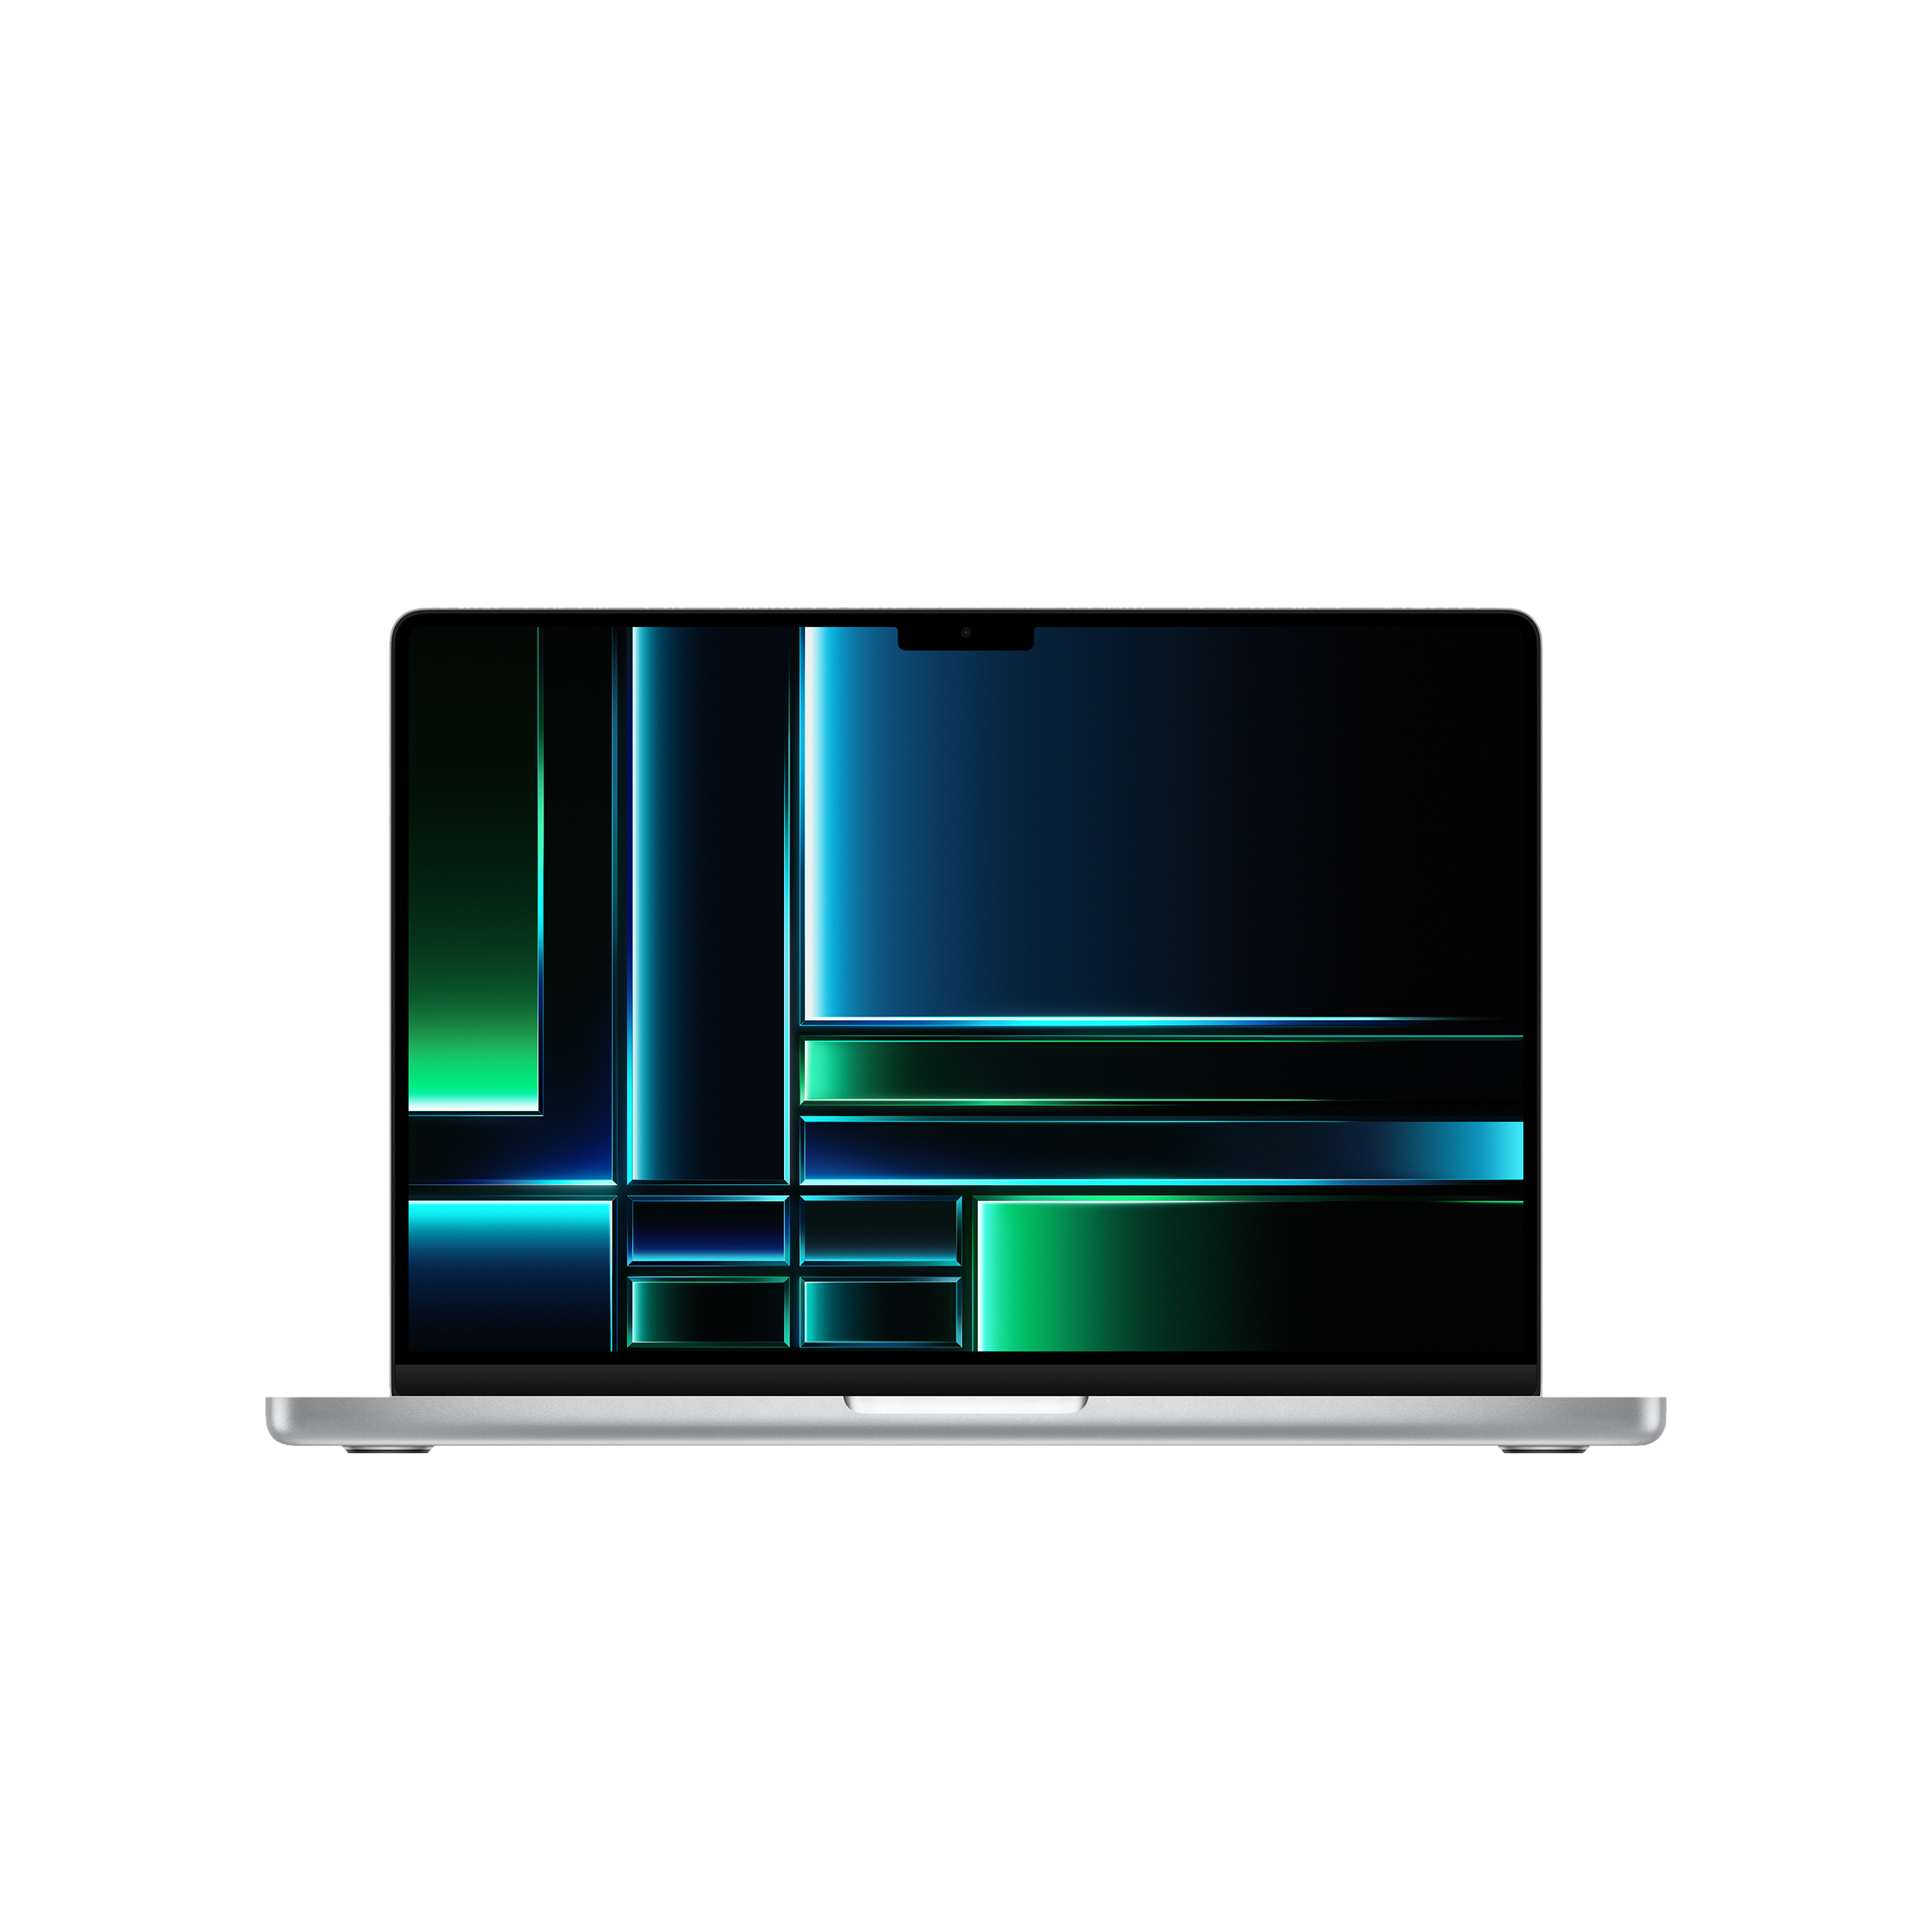 2020 Apple MacBook Air Laptop: Apple M1 Chip, 13” Retina Display, 16GB RAM,  256GB SSD Storage, Backlit Keyboard, FaceTime HD Camera, Touch ID. Works